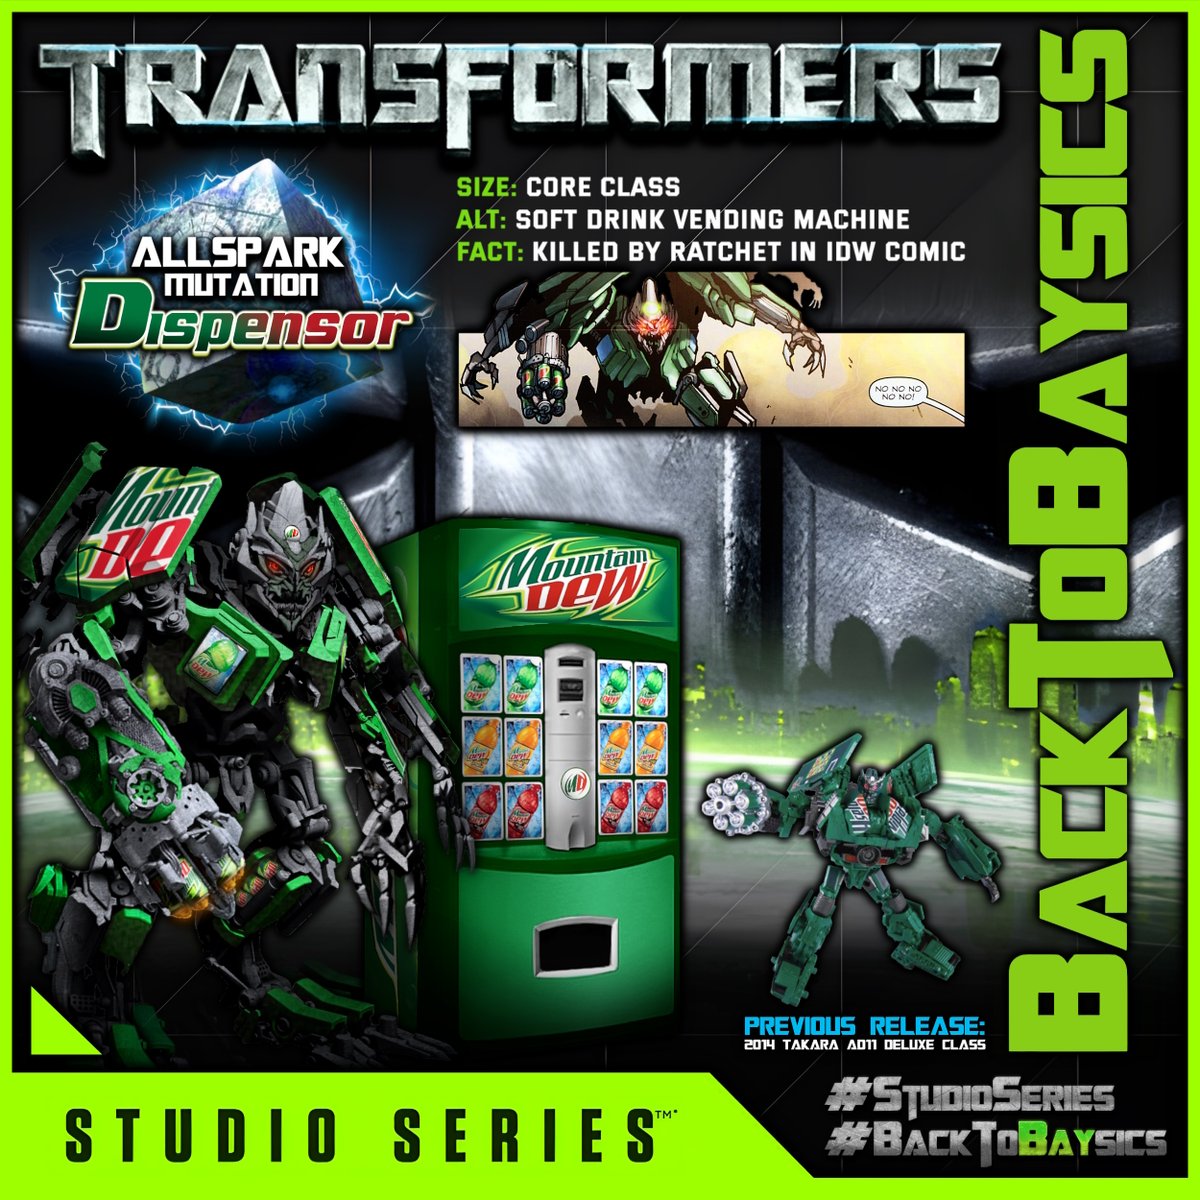 #Transformers #BackToBaysics #studioseries #mountaindew #mtndew